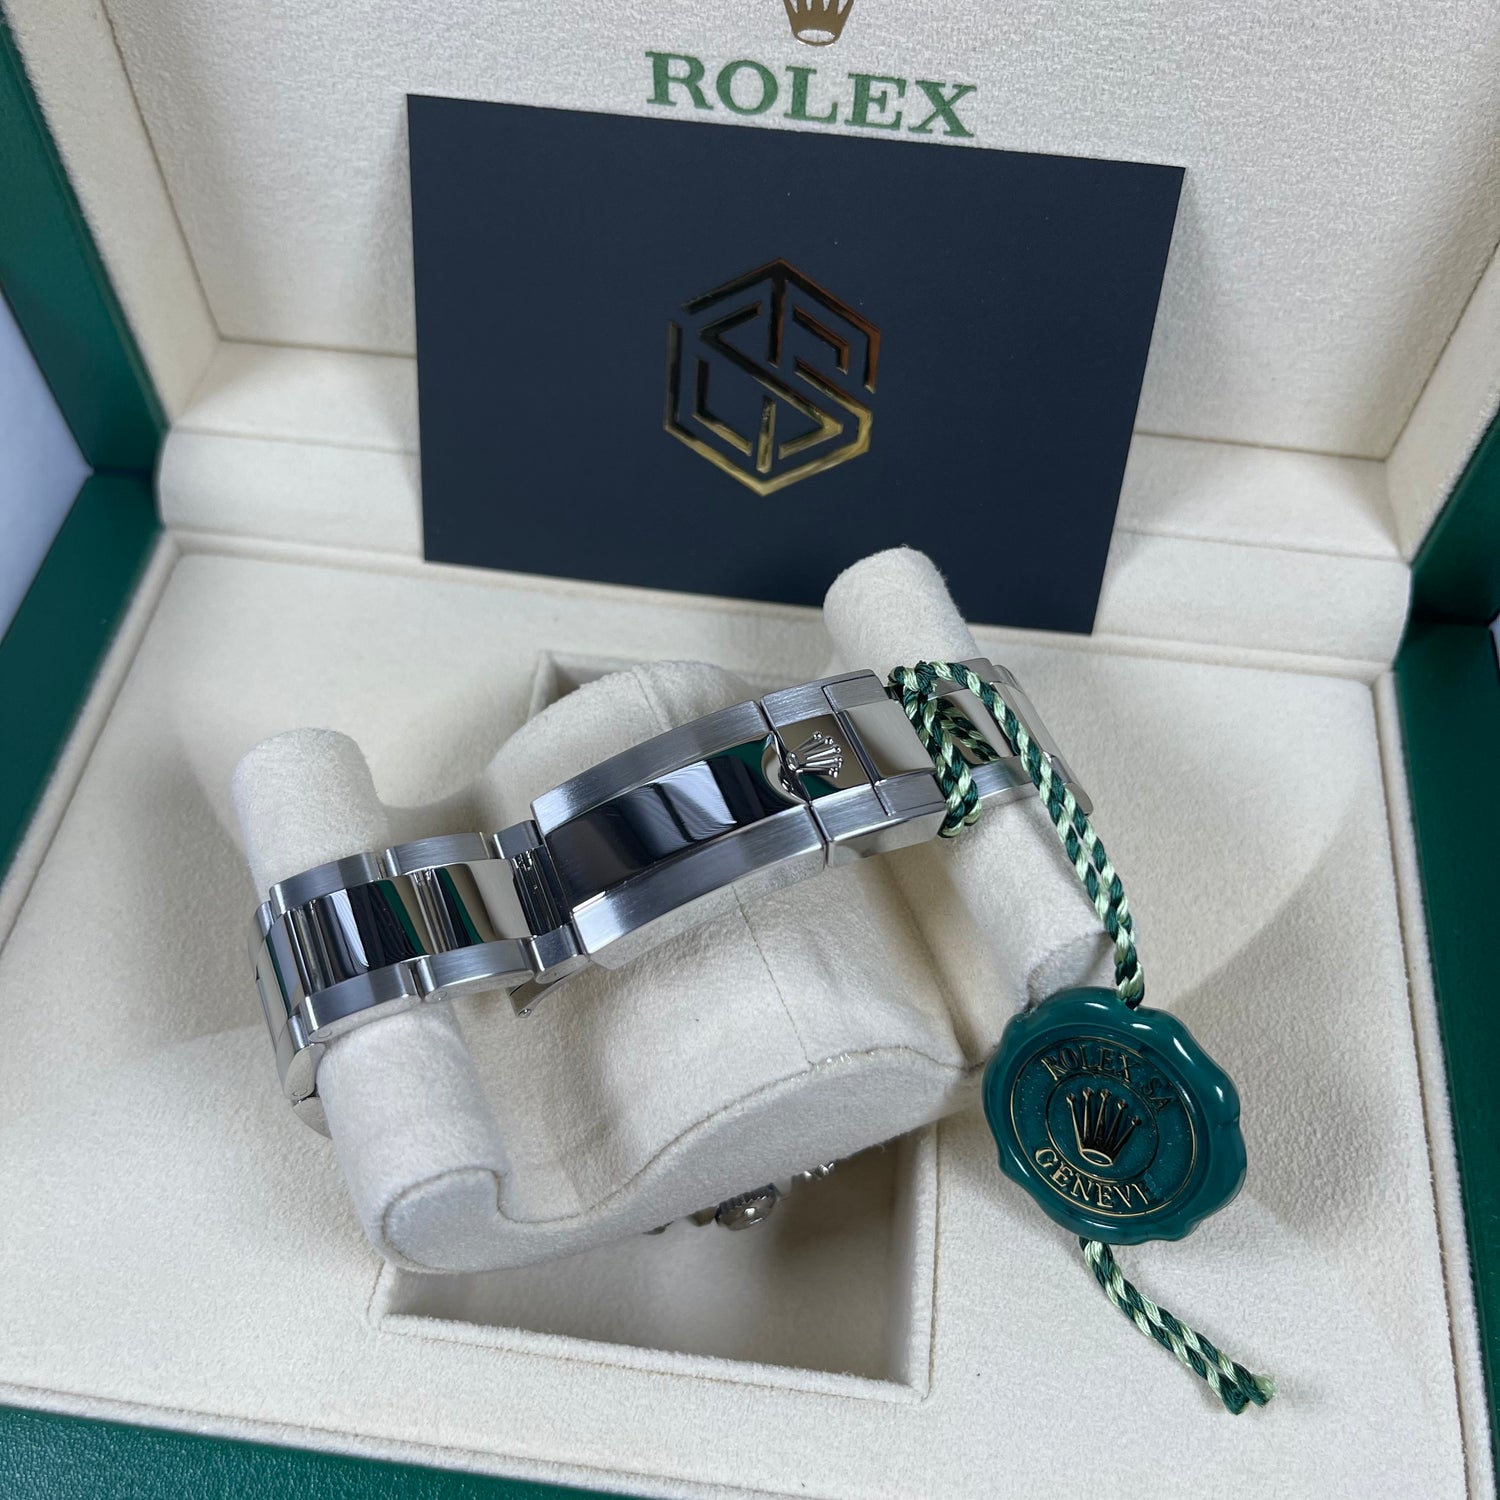 Rolex Cosmograph Daytona Ceramic White 'Panda' Dial 116500LN 2019 Watch